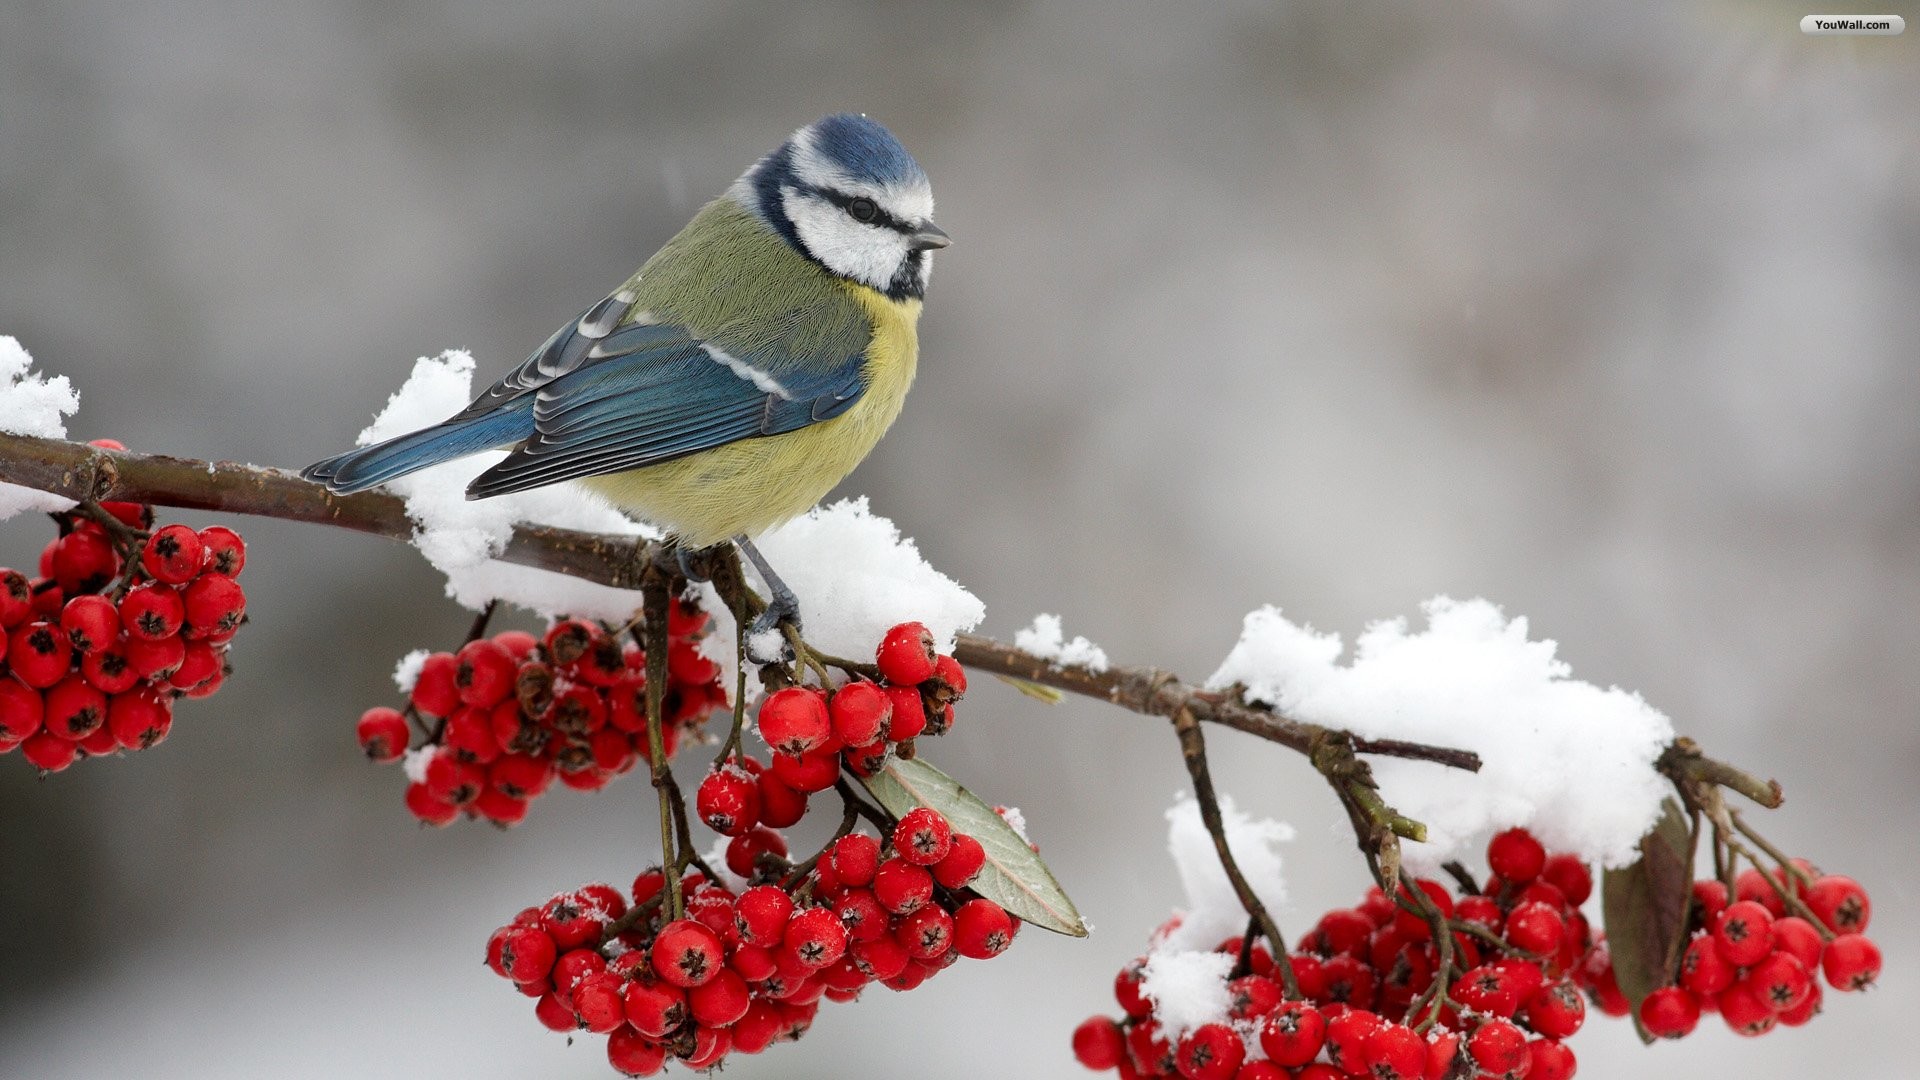 Photos of Winter birds to share on facebook Ventube.com Birds In Winter Screensavers